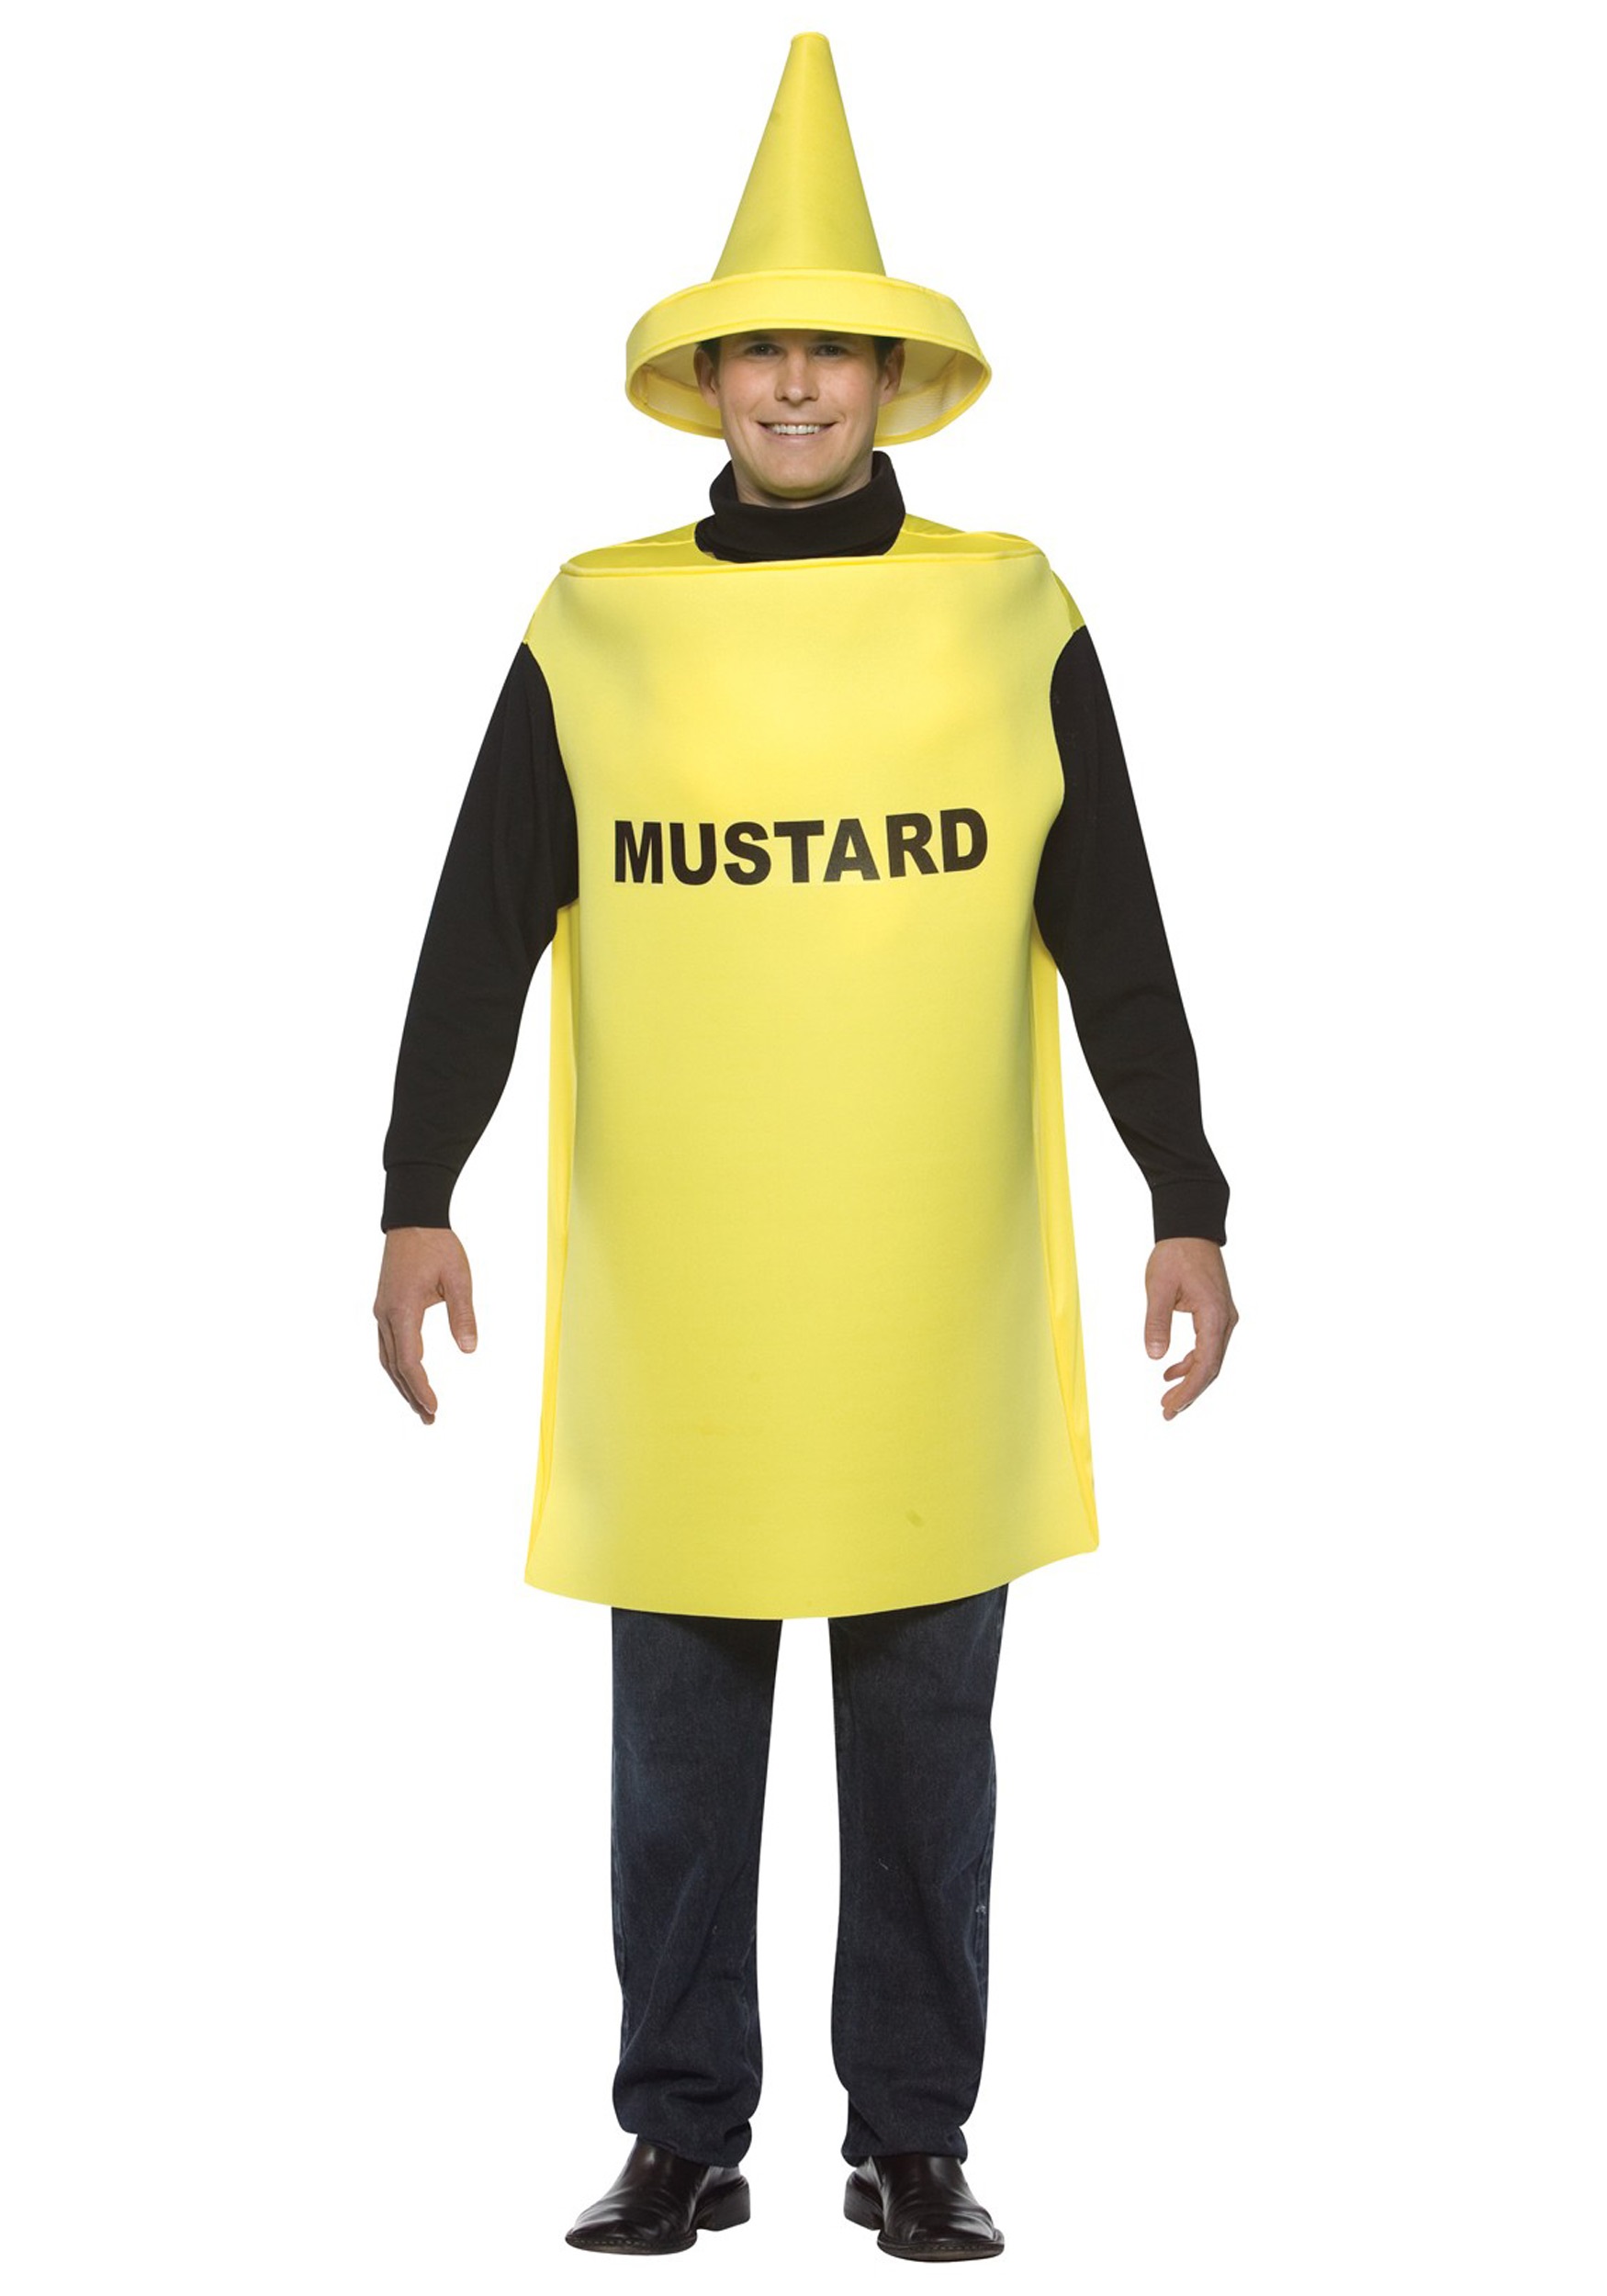 Adult Mustard Costume